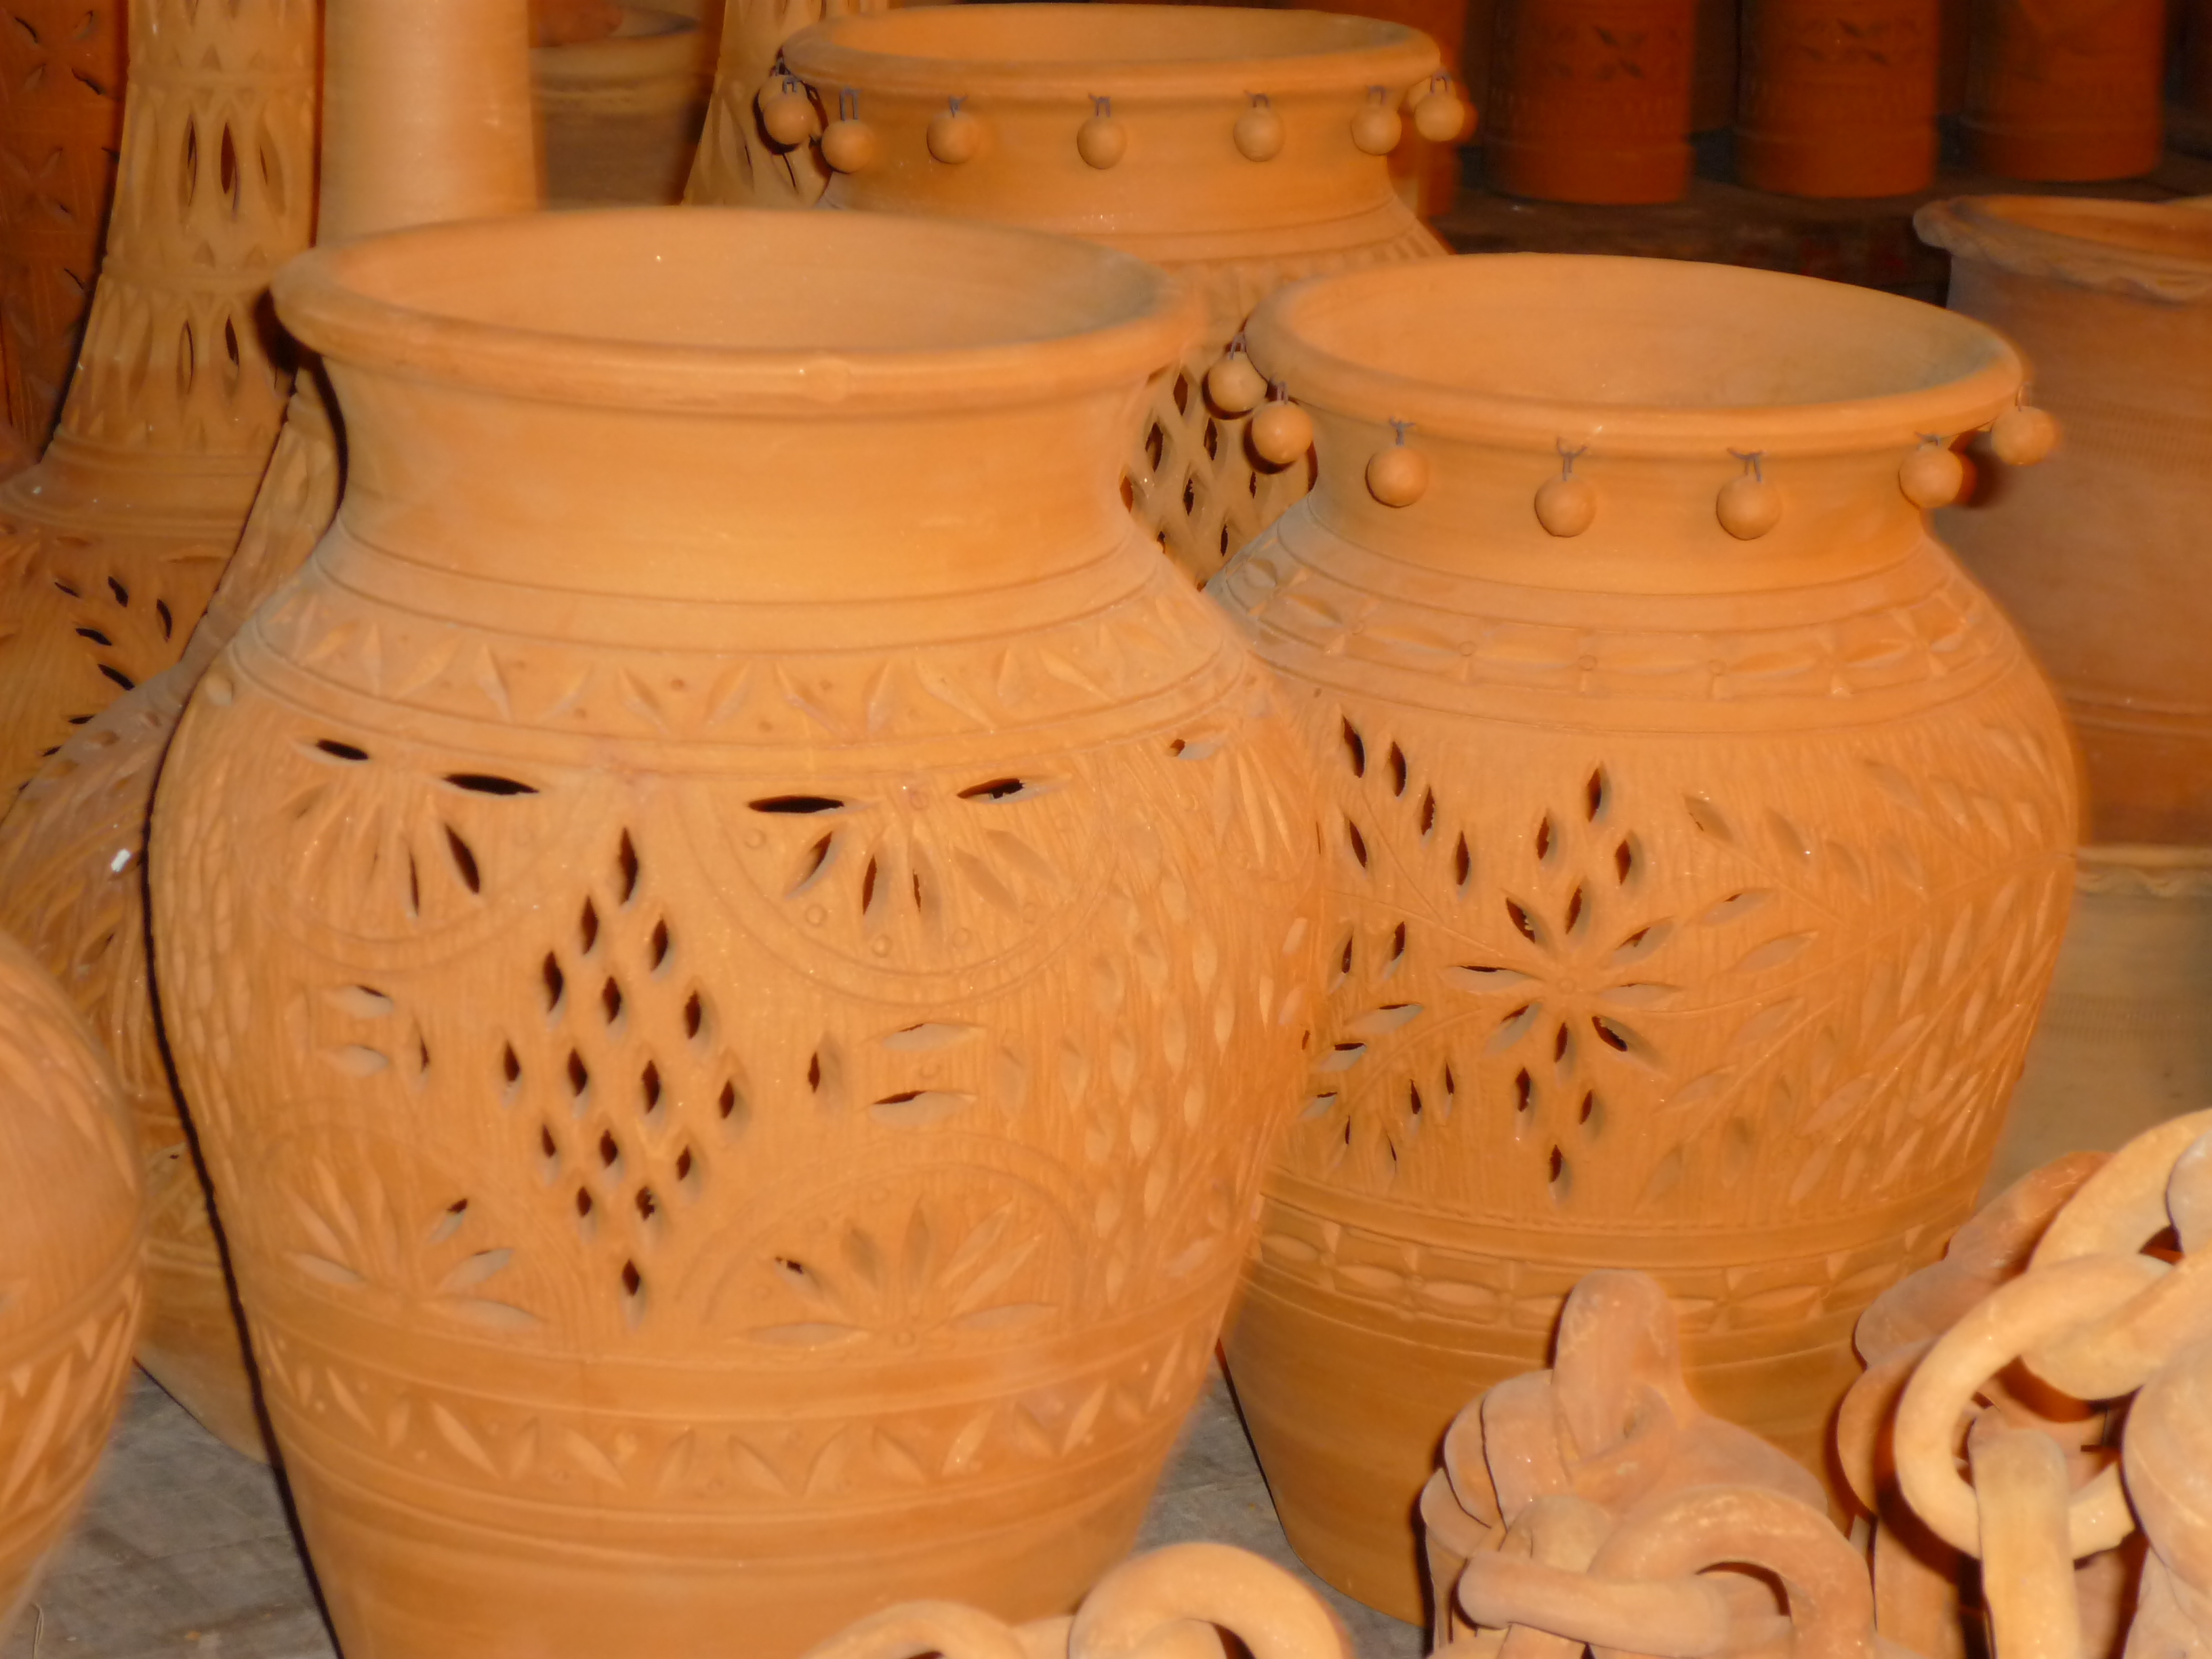 Pottery - Wikipedia, the free encyclopedia